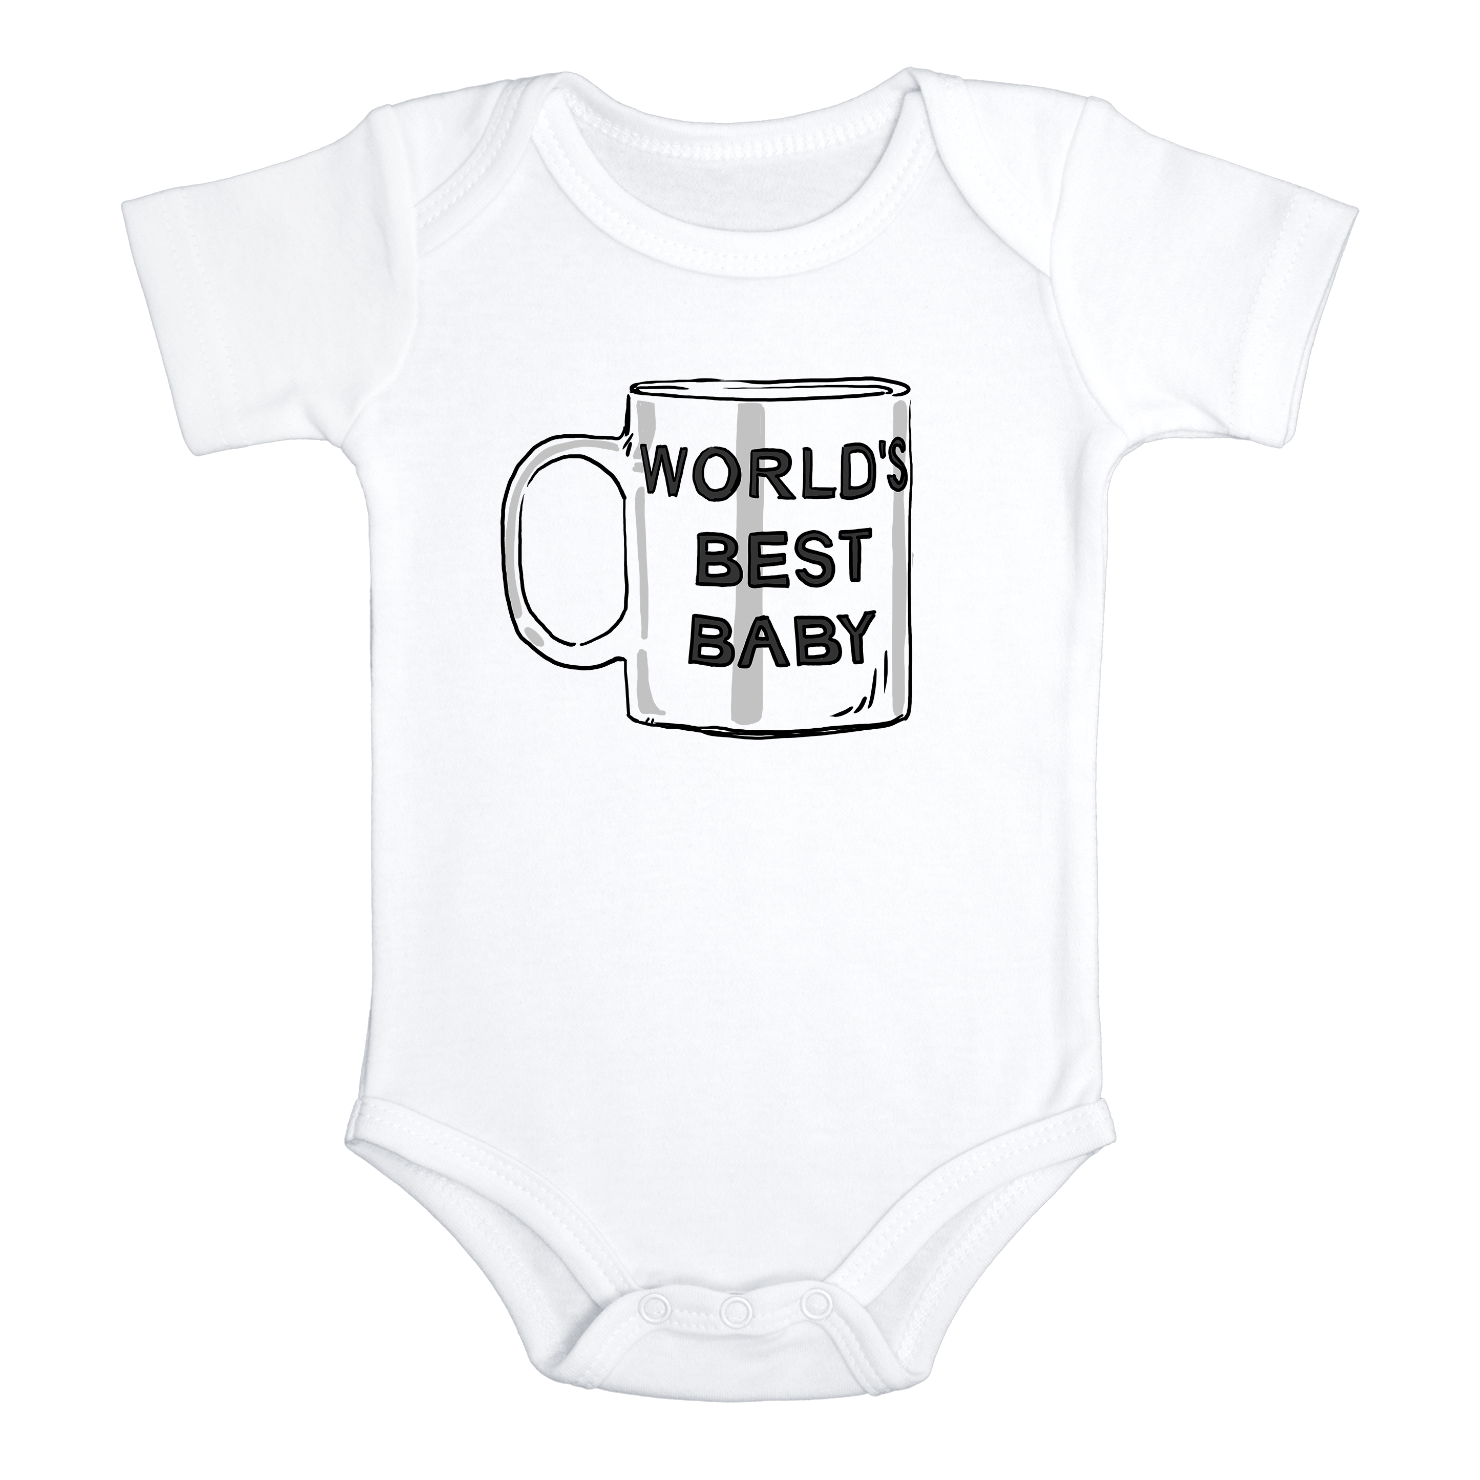 WORLD'S BEST BABY Funny the office baby onesies bodysuit (white: short or long sleeve)